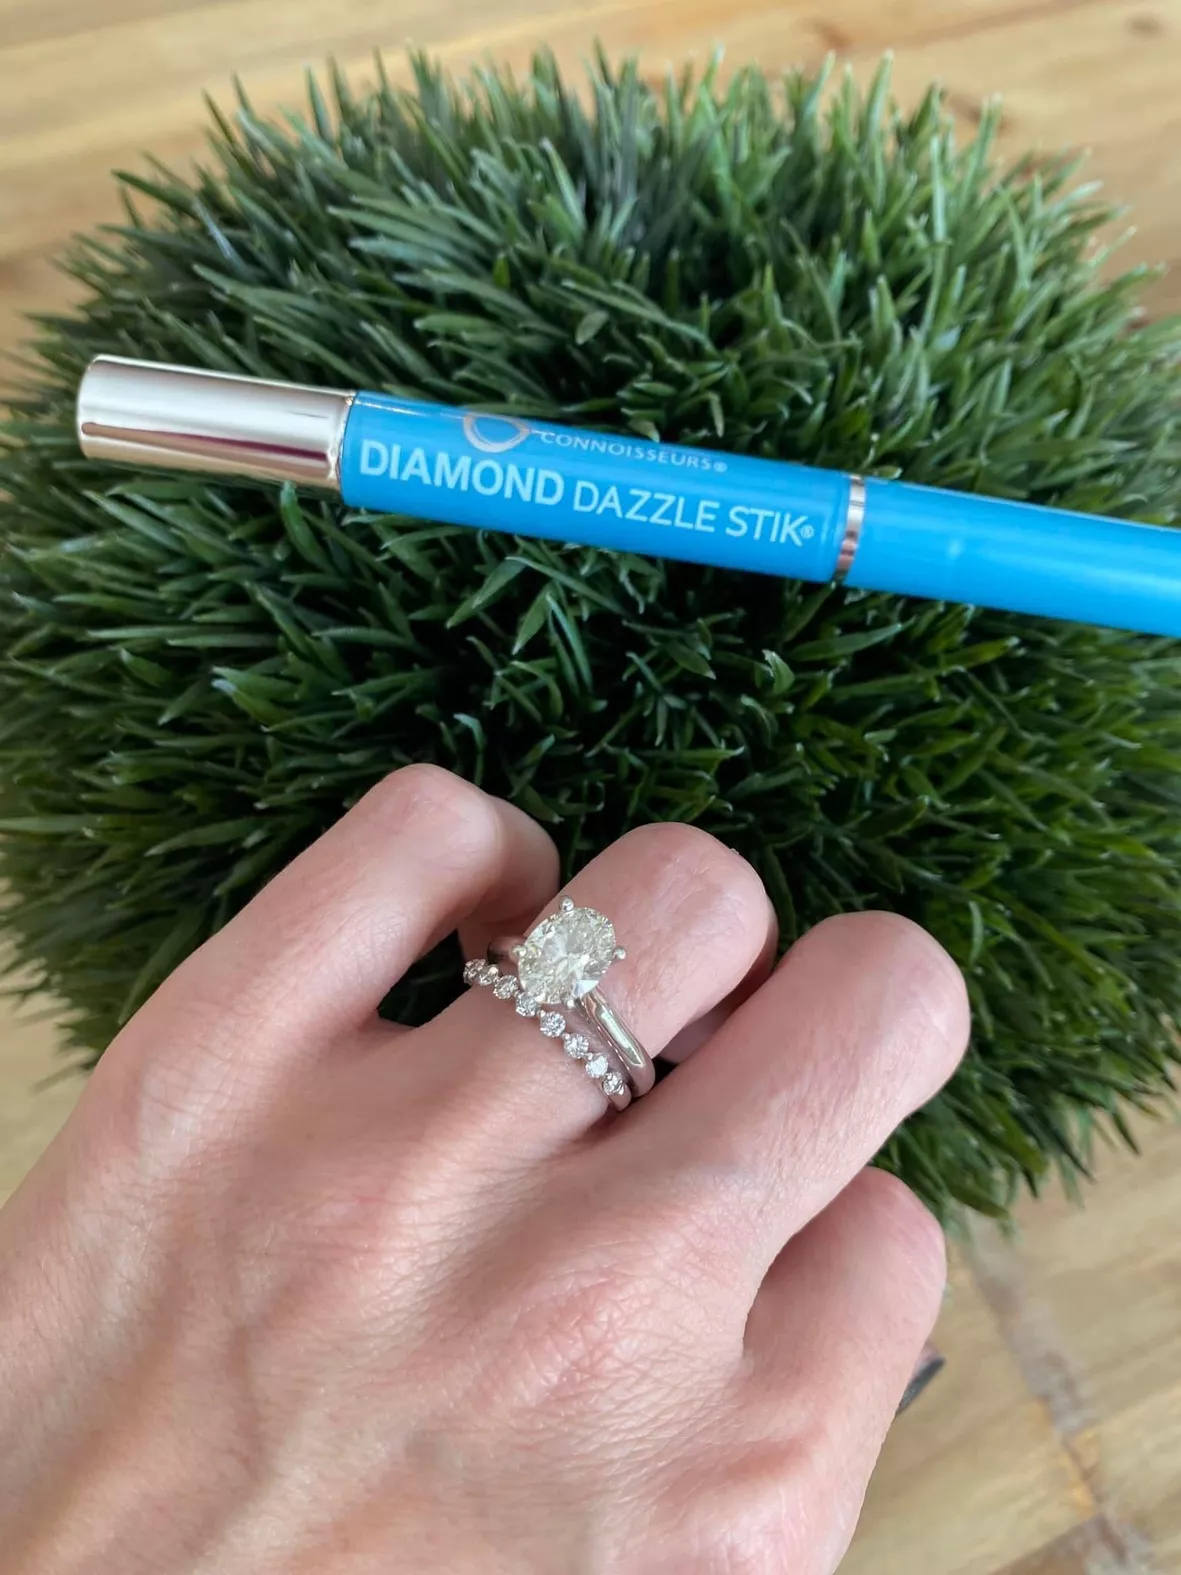 Diamond Dazzle Stik - Connoisseurs Jewelry Cleaner